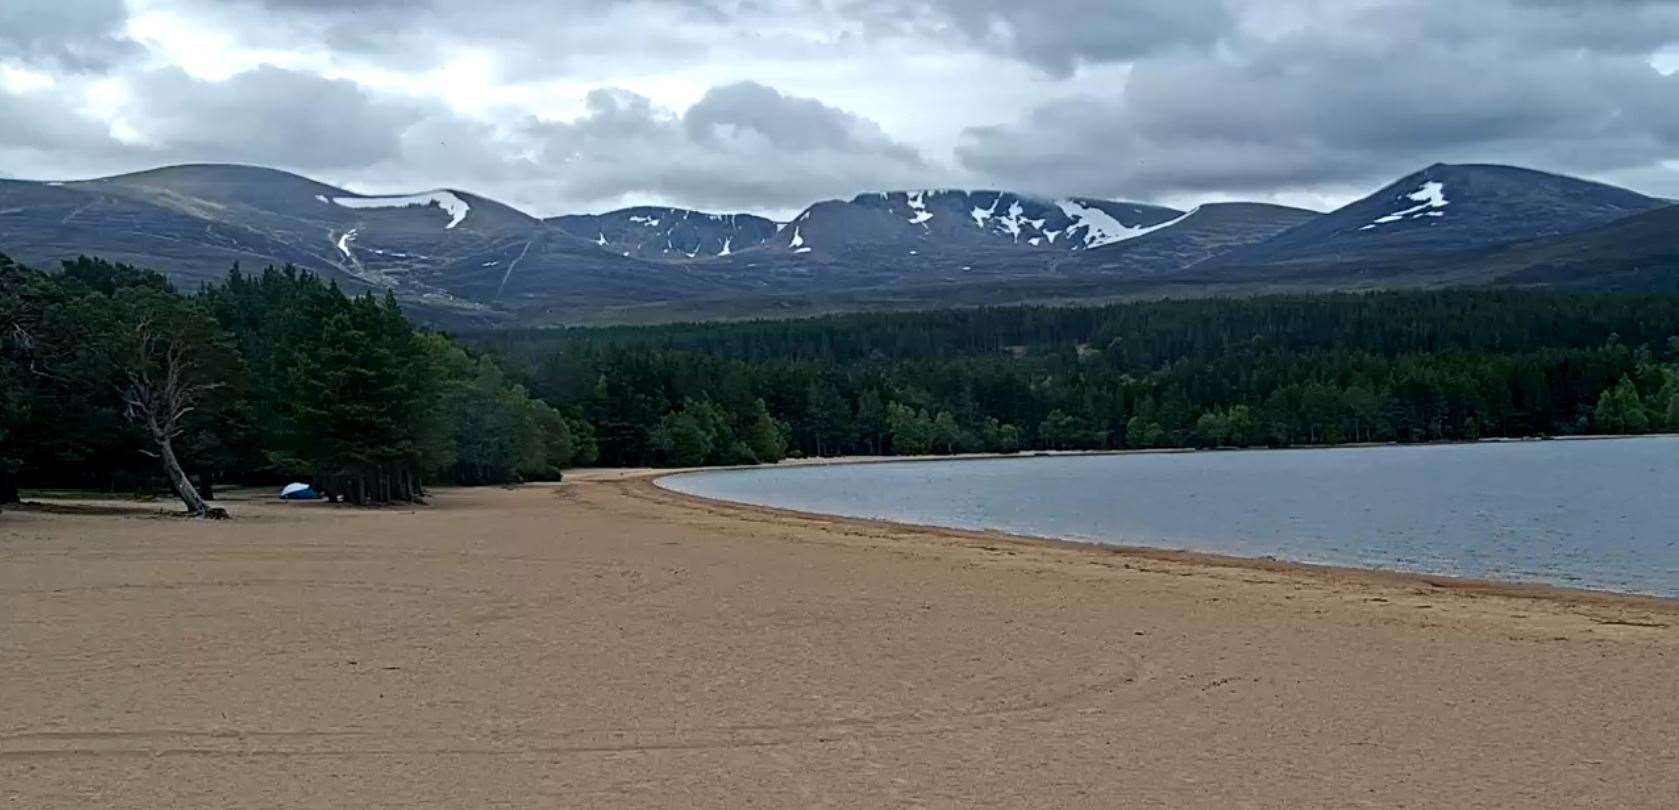 Image from the Loch Morlich watersports webcam.